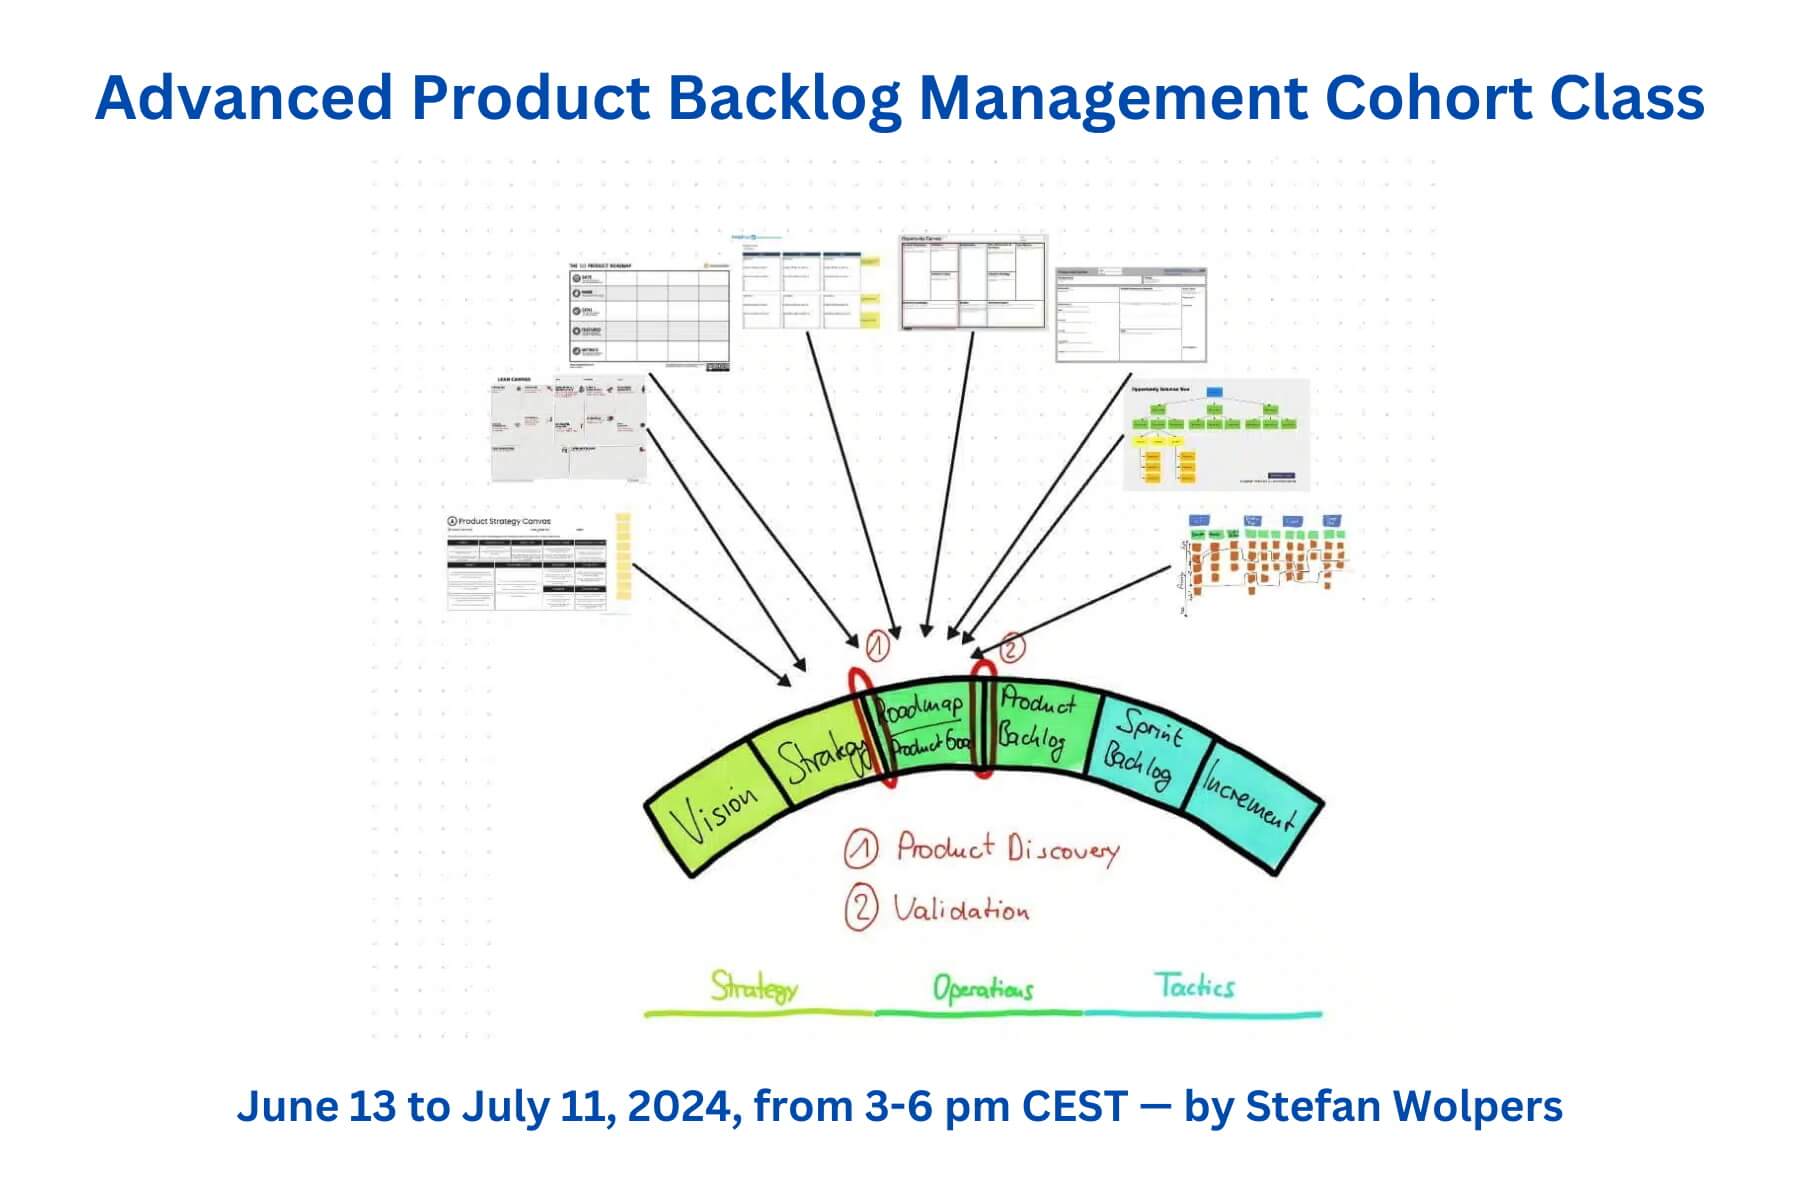 Advanced Product Backlog Management Cohort of June 13-July 11, 2024 — Berlin-Product-People.com